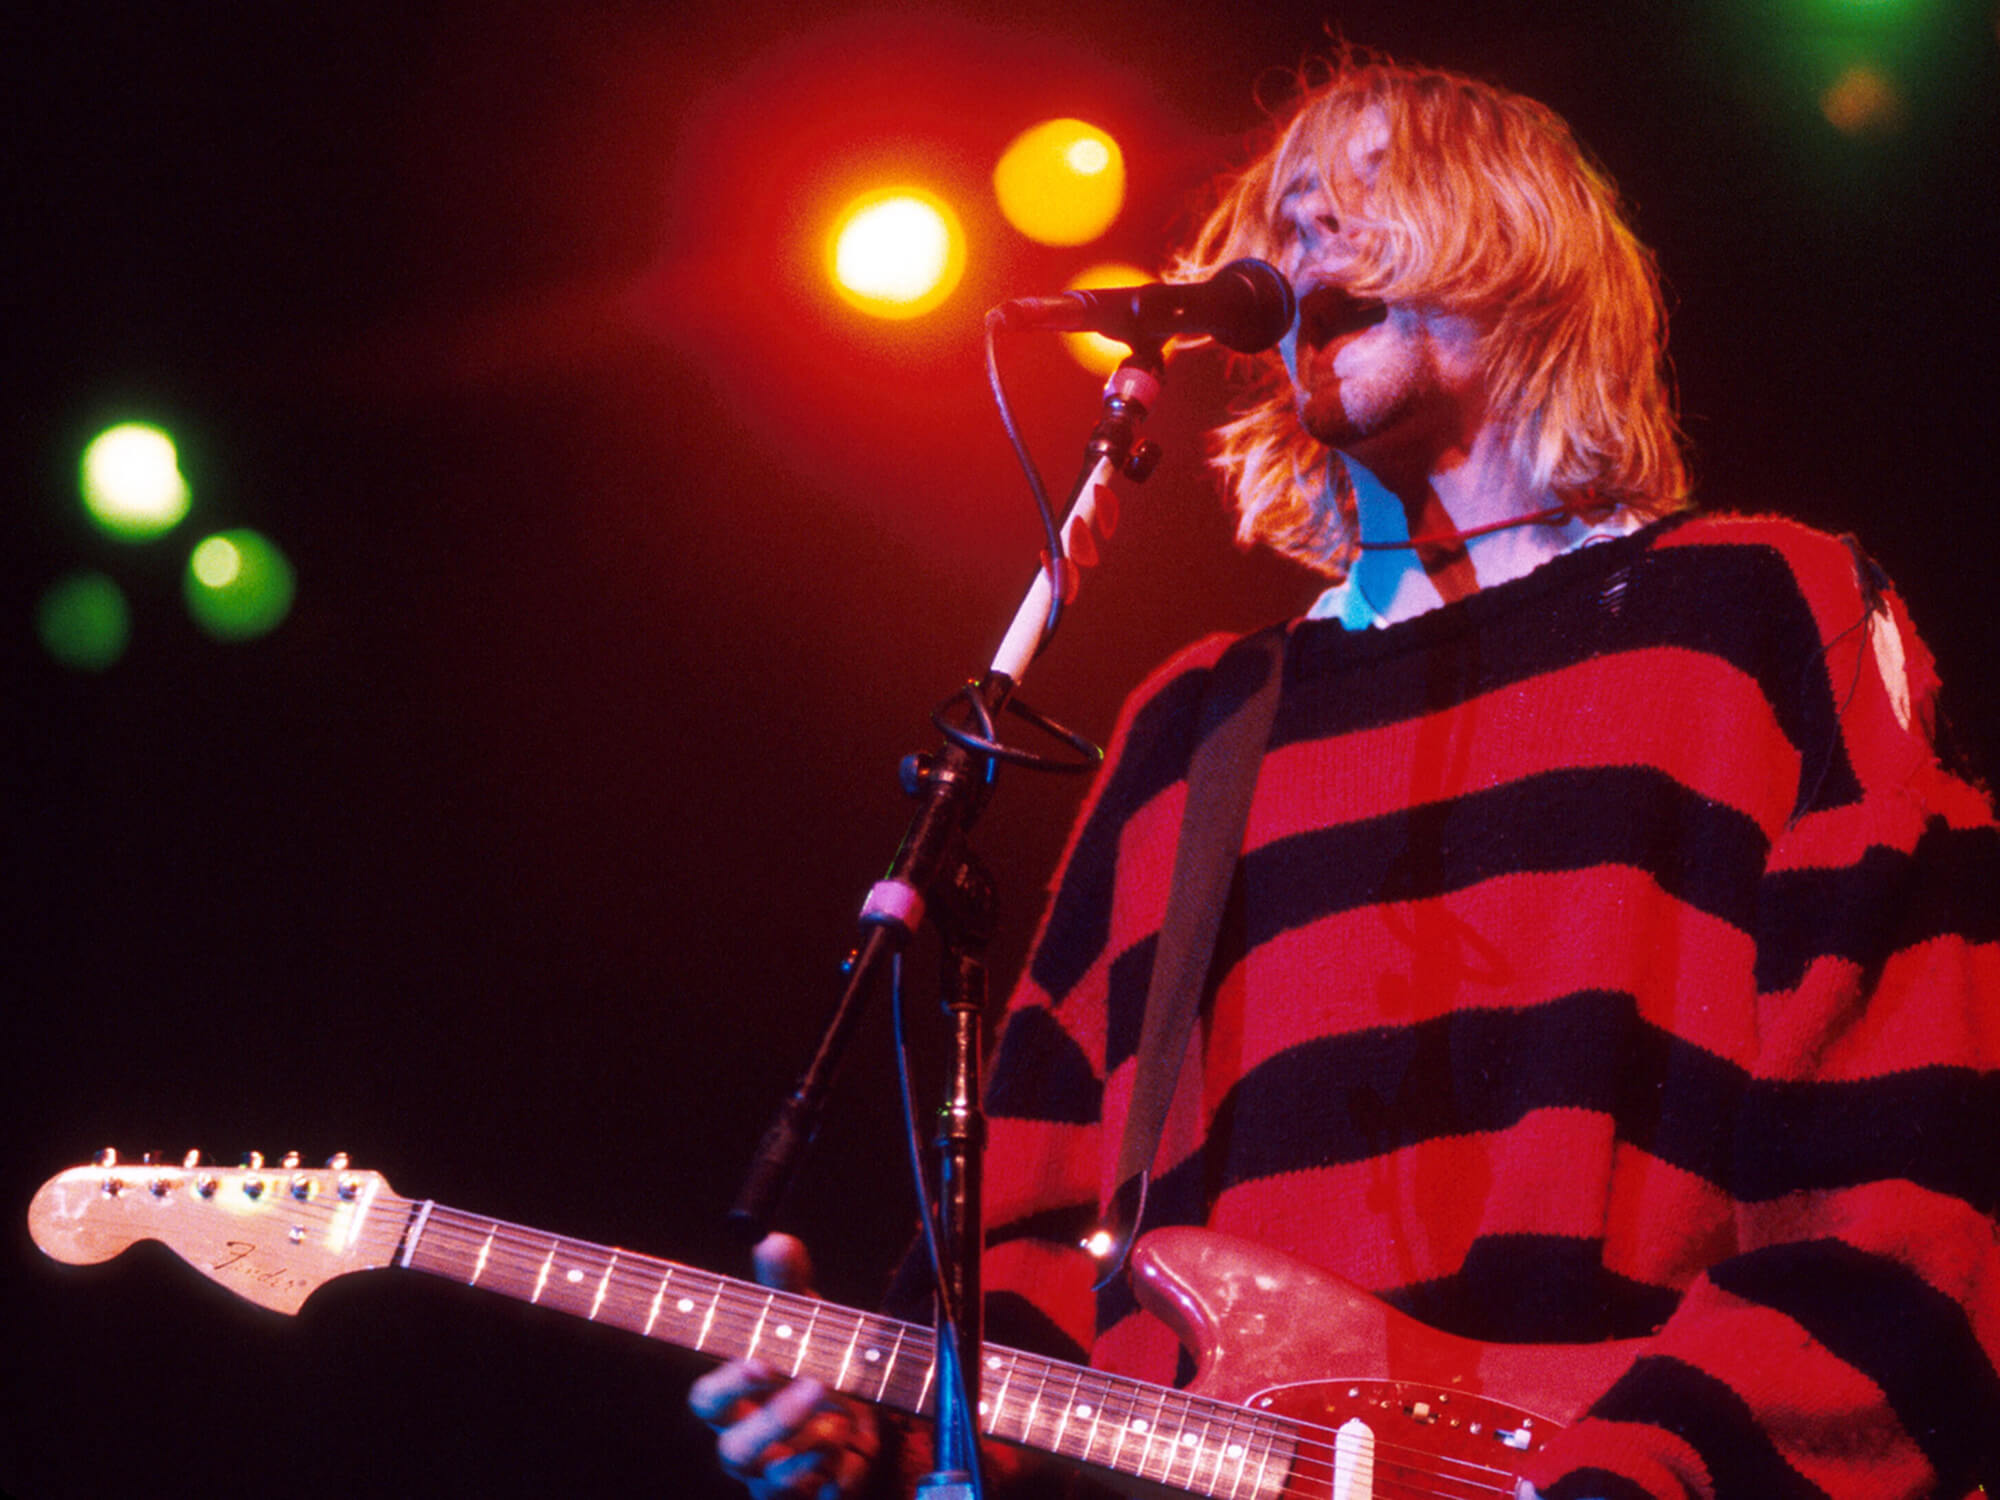 Kurt Cobain of Nirvana, photo by KMazur/WireImage via Getty Images